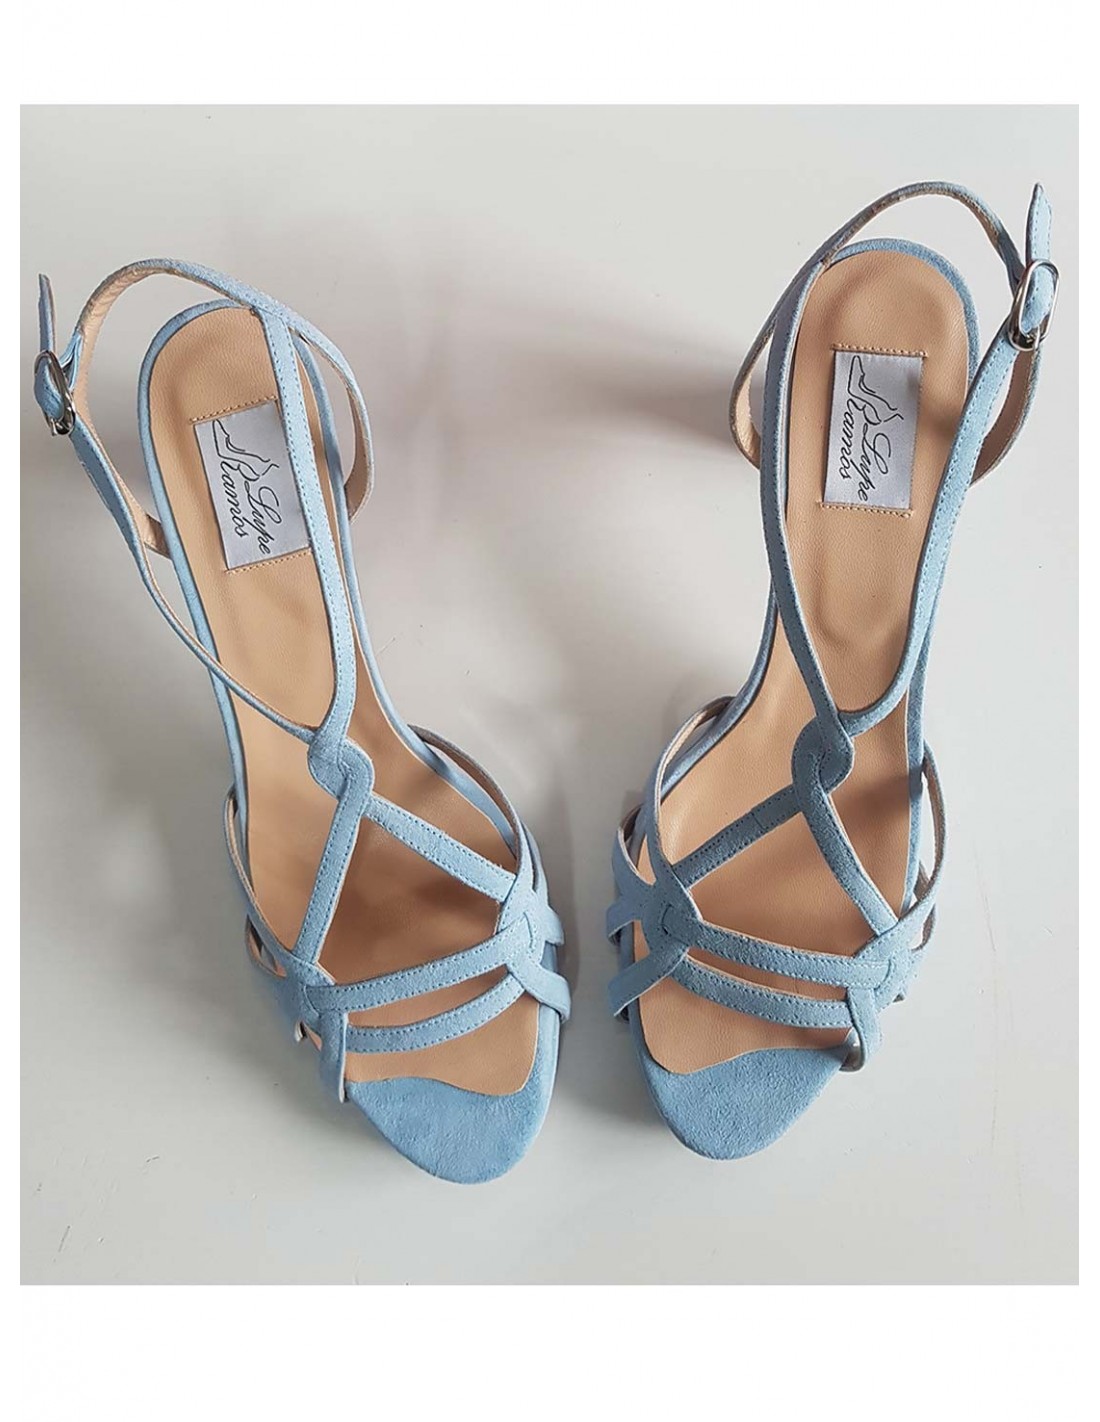 Zapatos de con plataforma ante azul INVITADISIMA